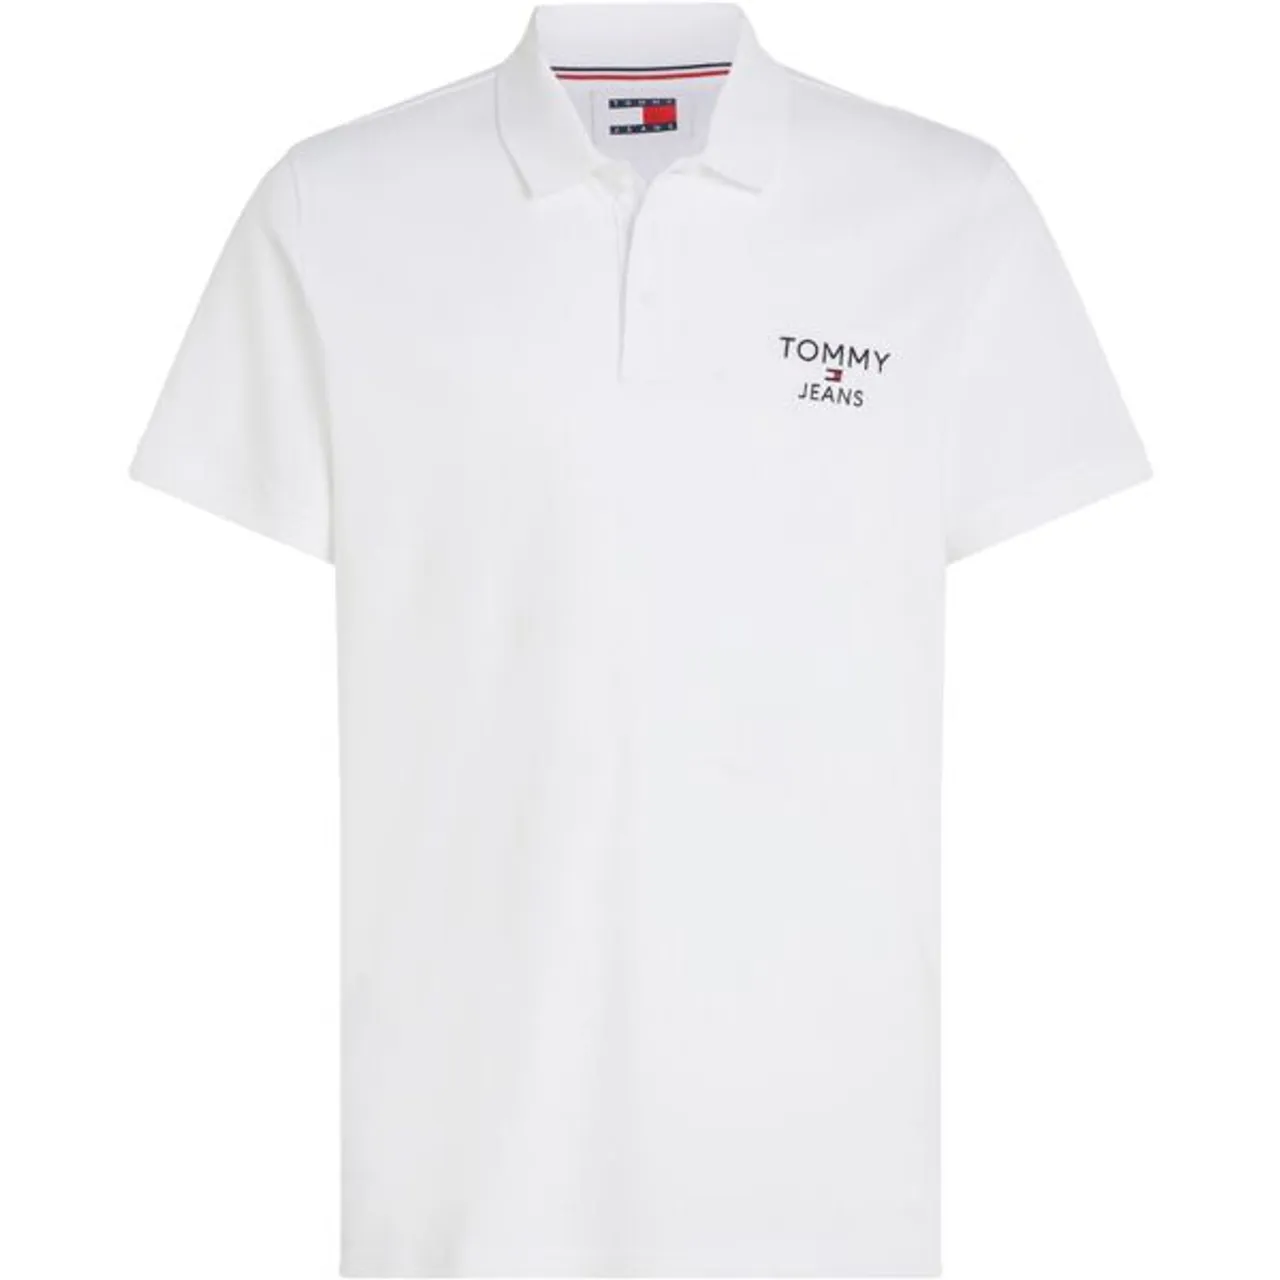 Poloshirt TOMMY JEANS "TJM SLIM CORP POLO" Gr. M, weiß (white) Herren Shirts Kurzarm